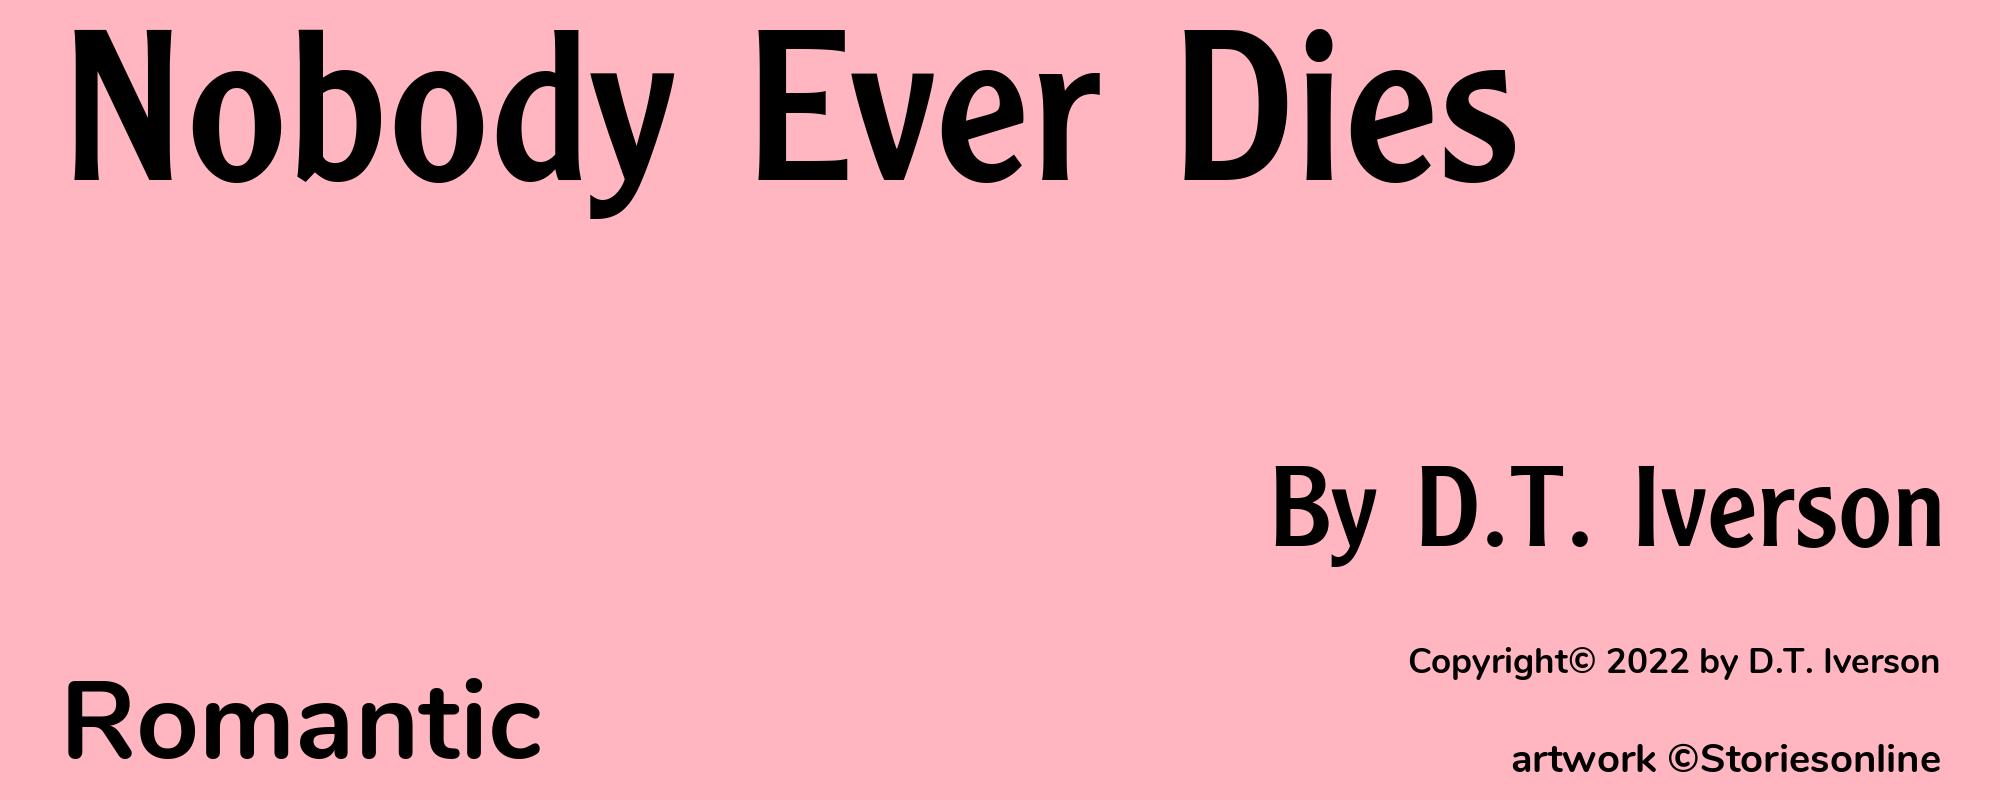 Nobody Ever Dies - Cover